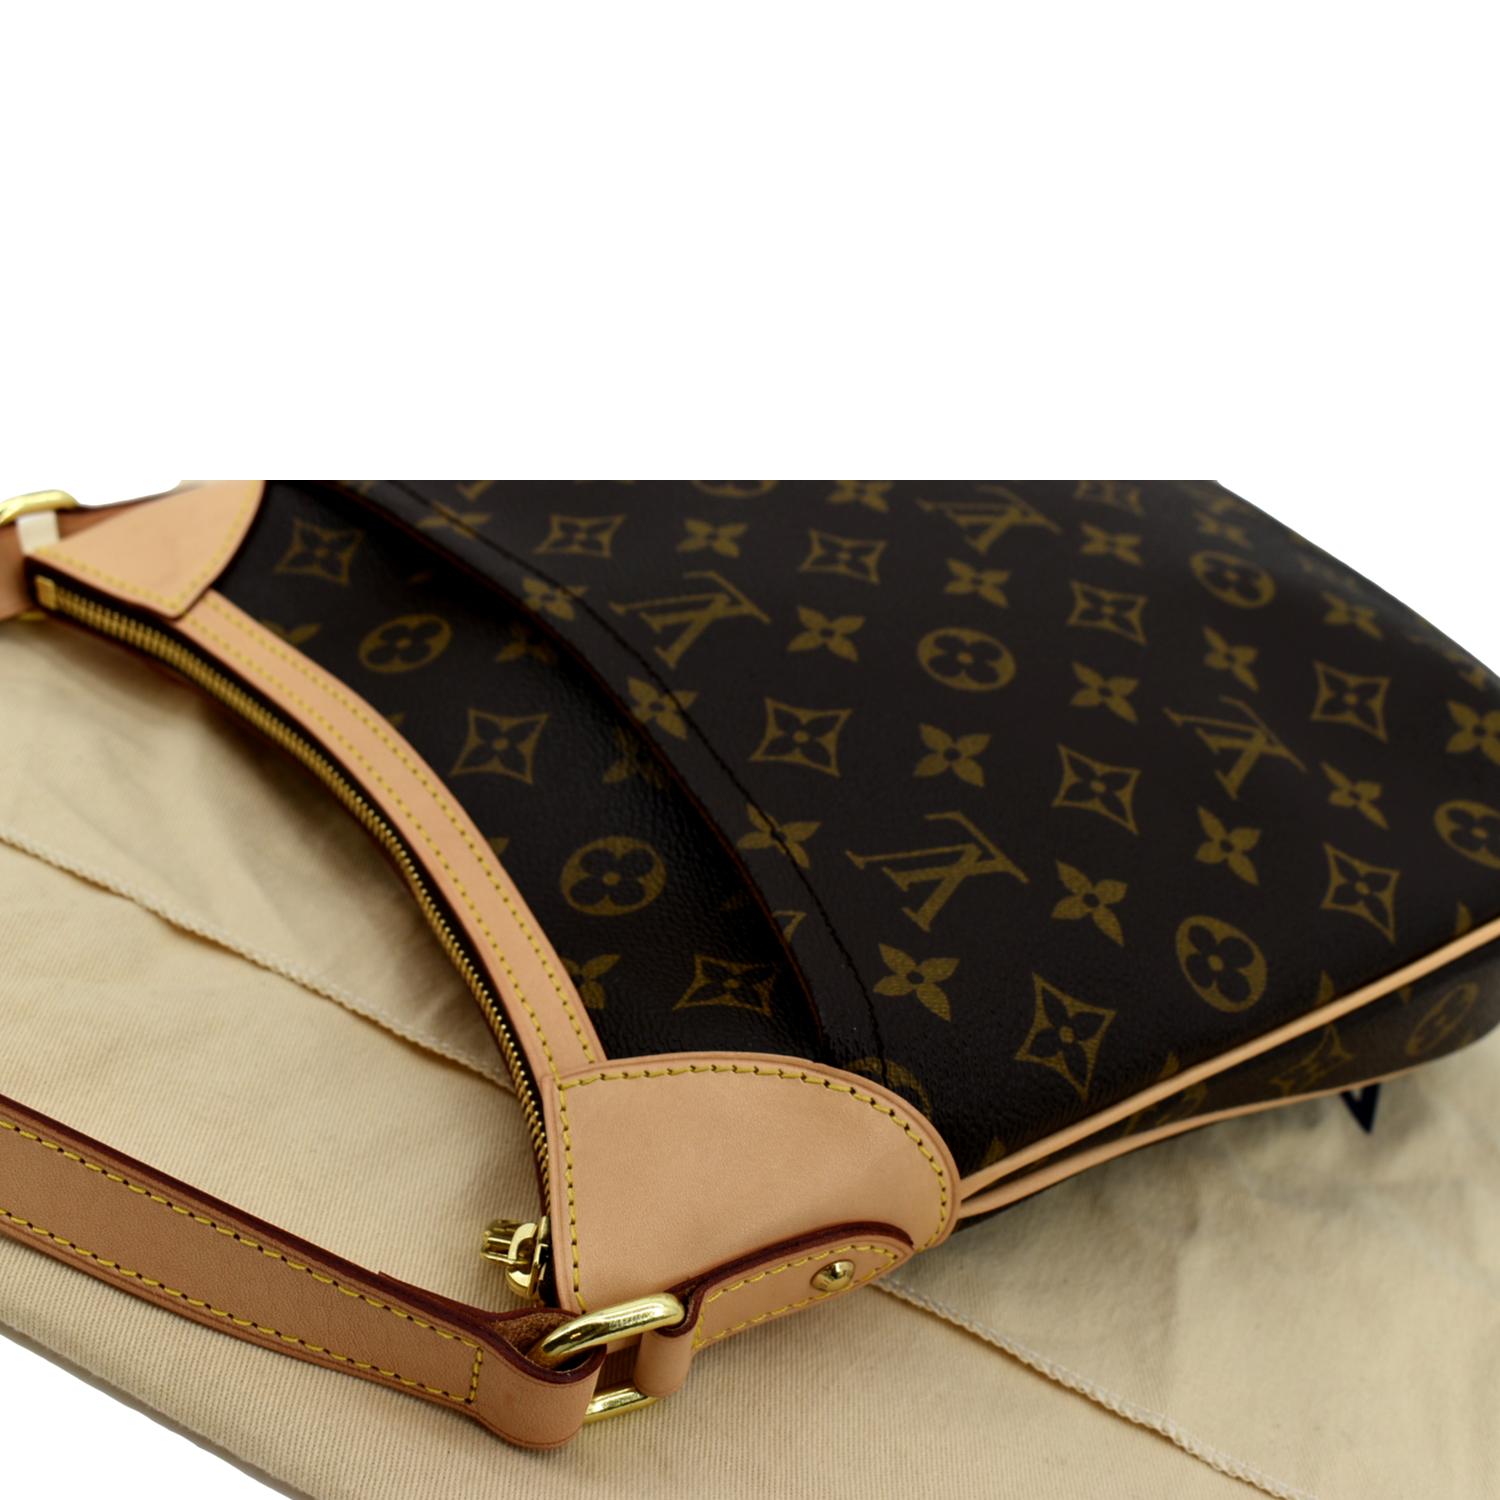 Top Louis Vuitton Crossbody Bags For Women